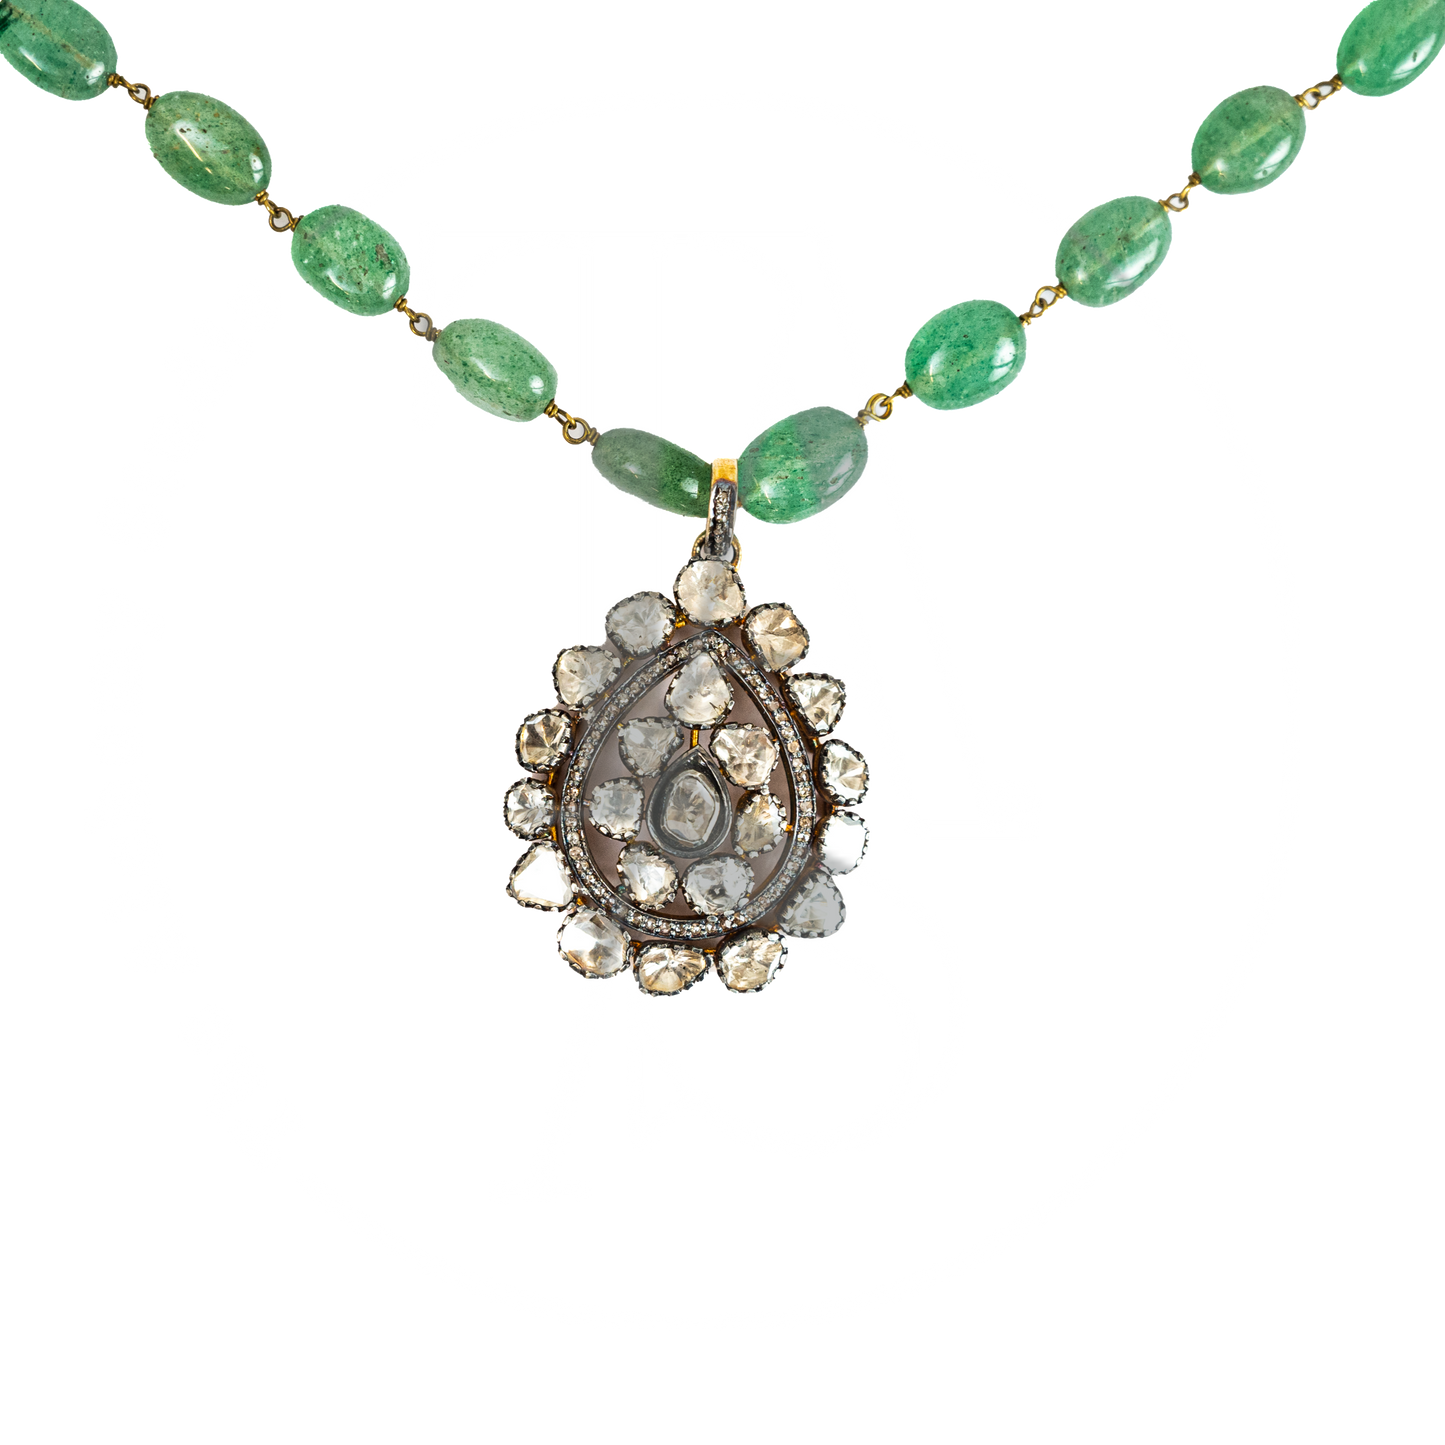 Tula Uncut Diamond Pendant with Emeralds